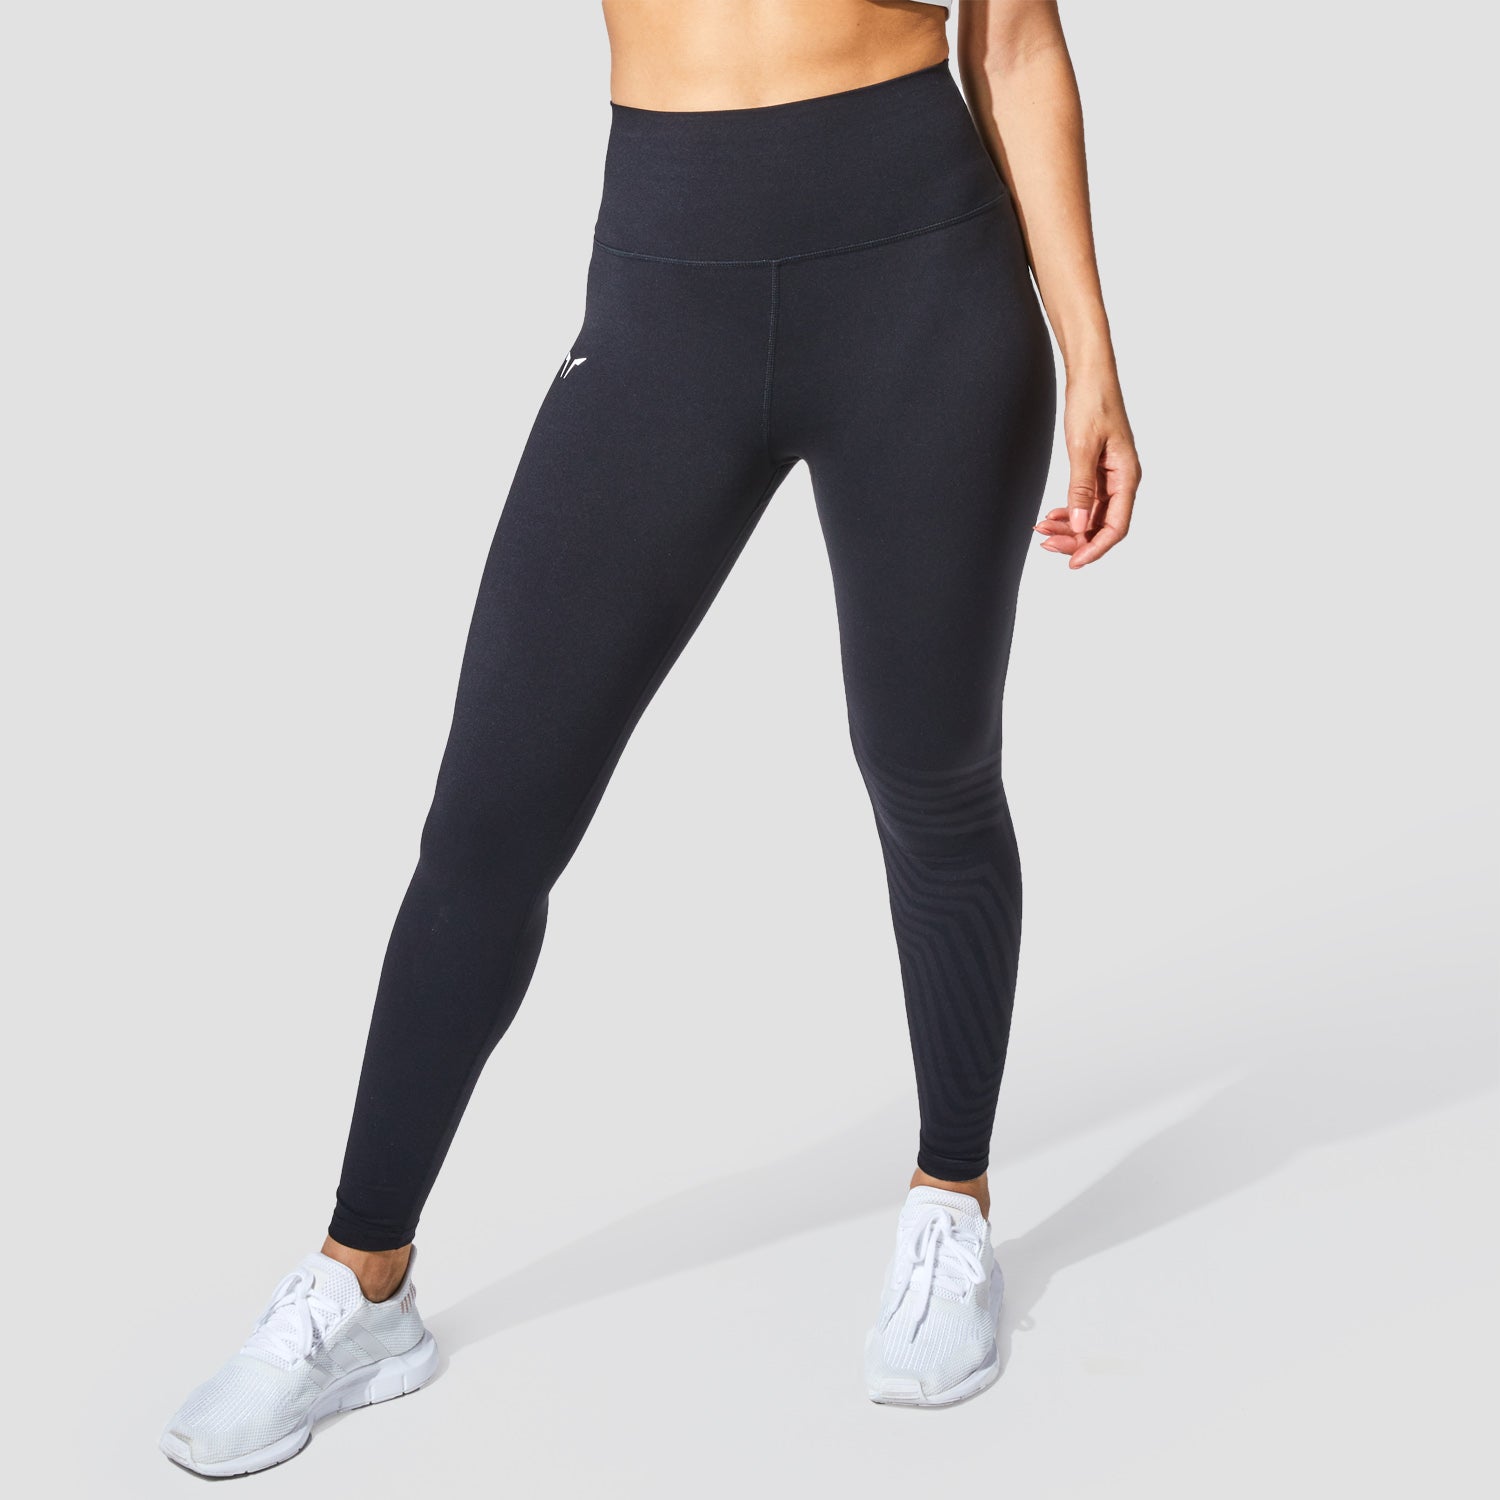 squatwolf-workout-clothes-graphic-wave-eyes-leggins-black-gym-leggings-for-women